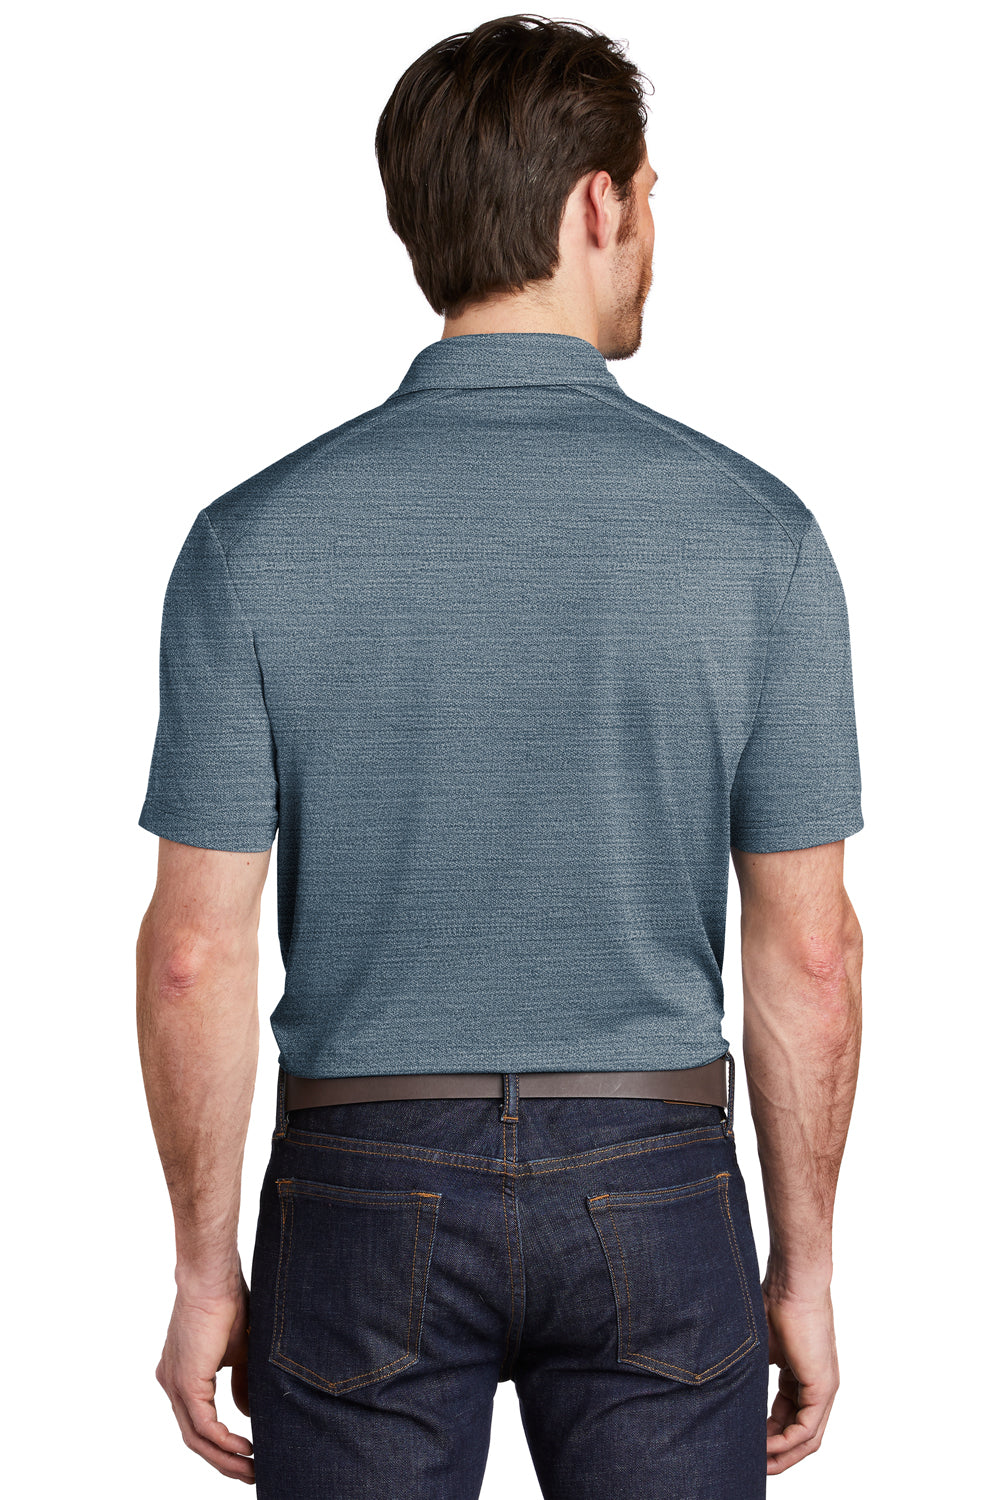 Port Authority Mens Stretch Short Sleeve Polo Shirt Regatta Blue/Gusty Grey Side